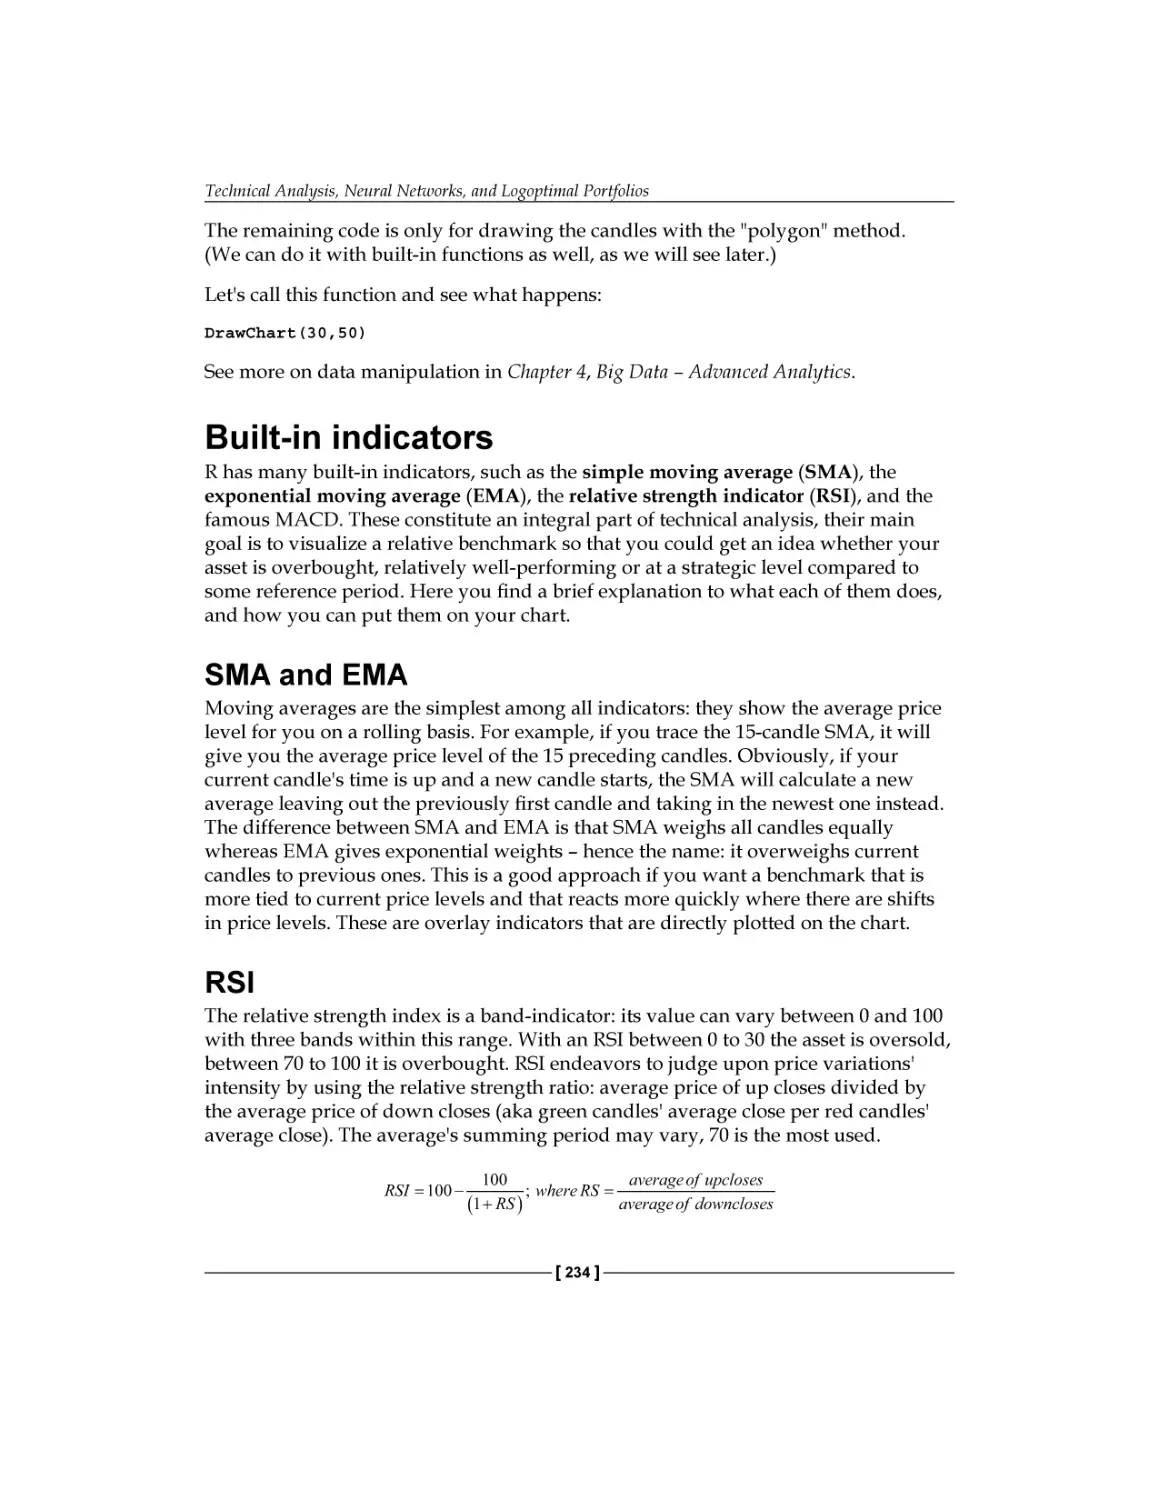 Built-in indicators
SMA and EMA
RSI